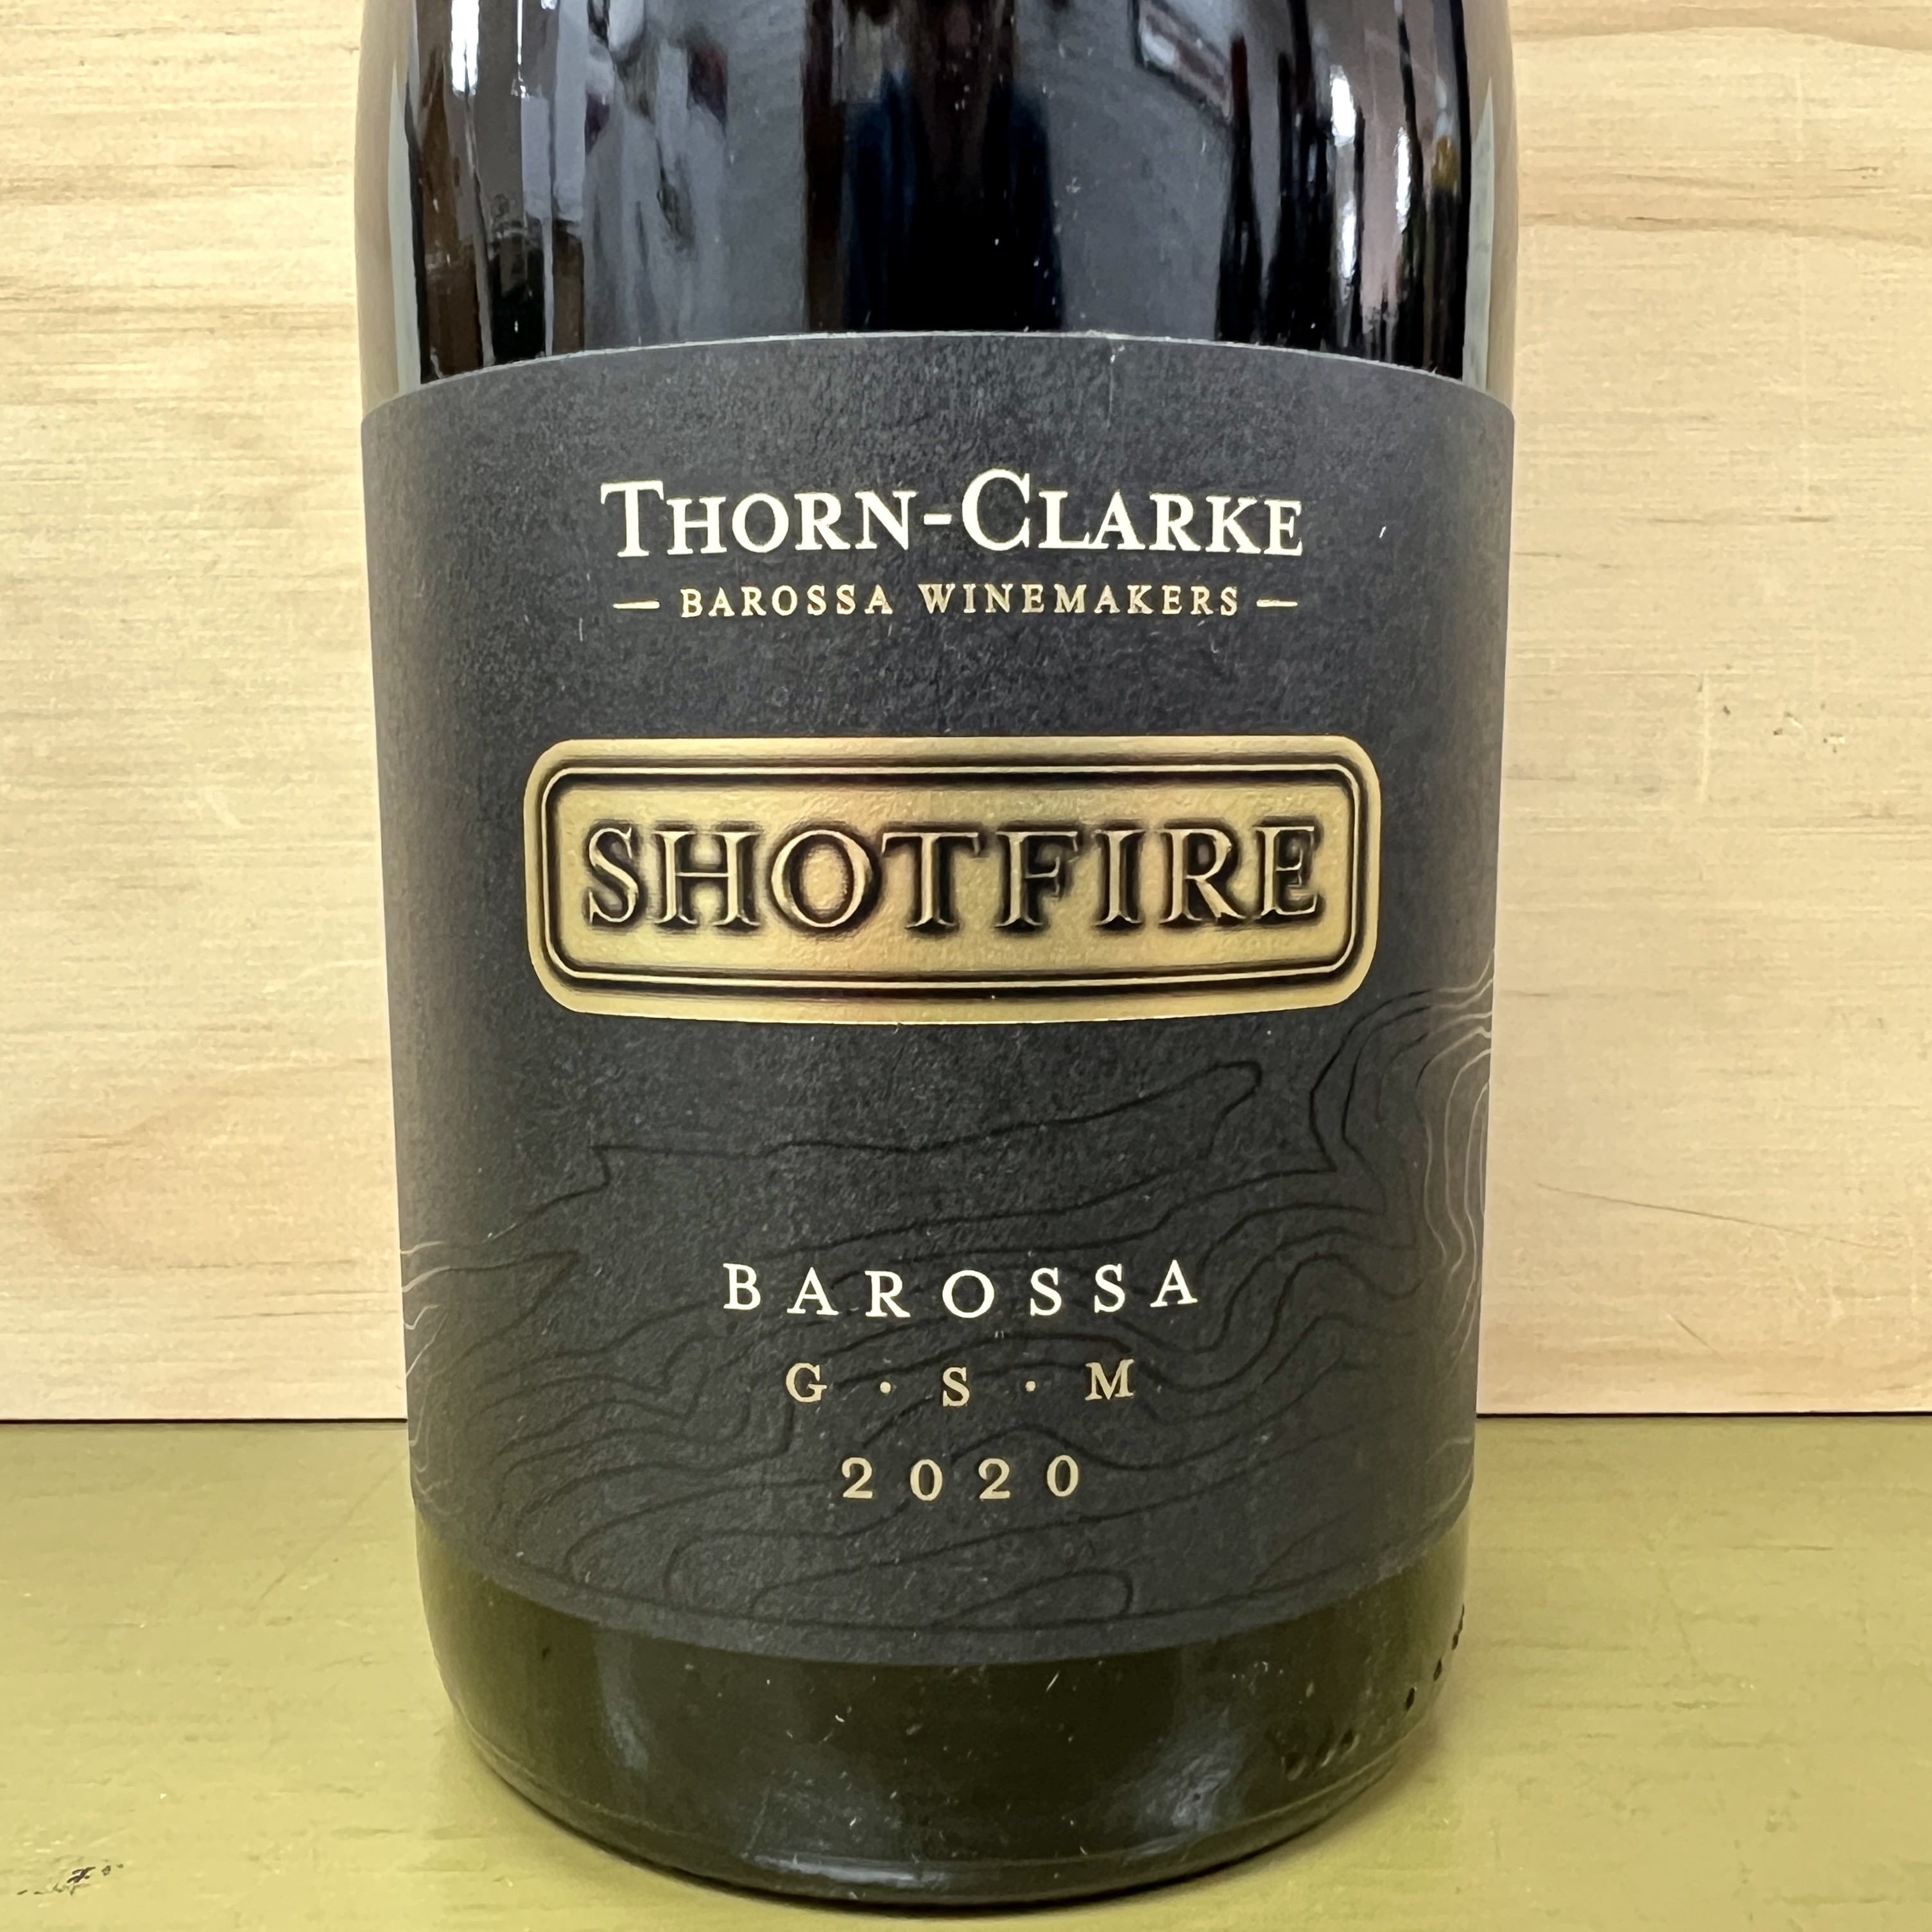 Thorn-Clarke Shotfire Barossa G S M 2020